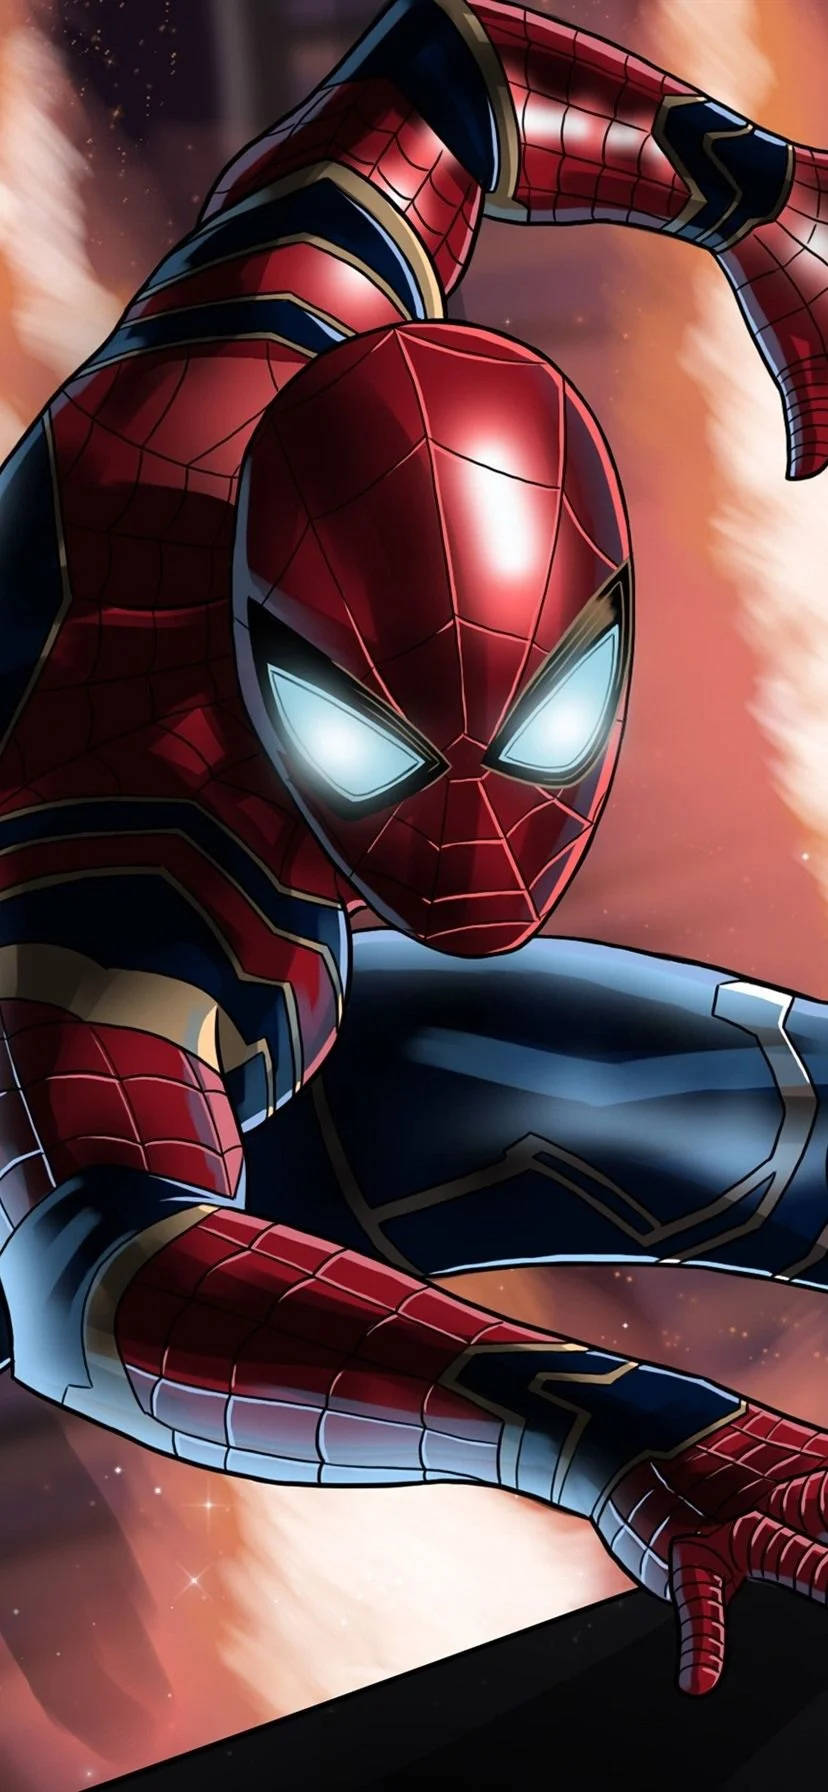 Spider-man Crouched Superhero Iphone Wallpaper